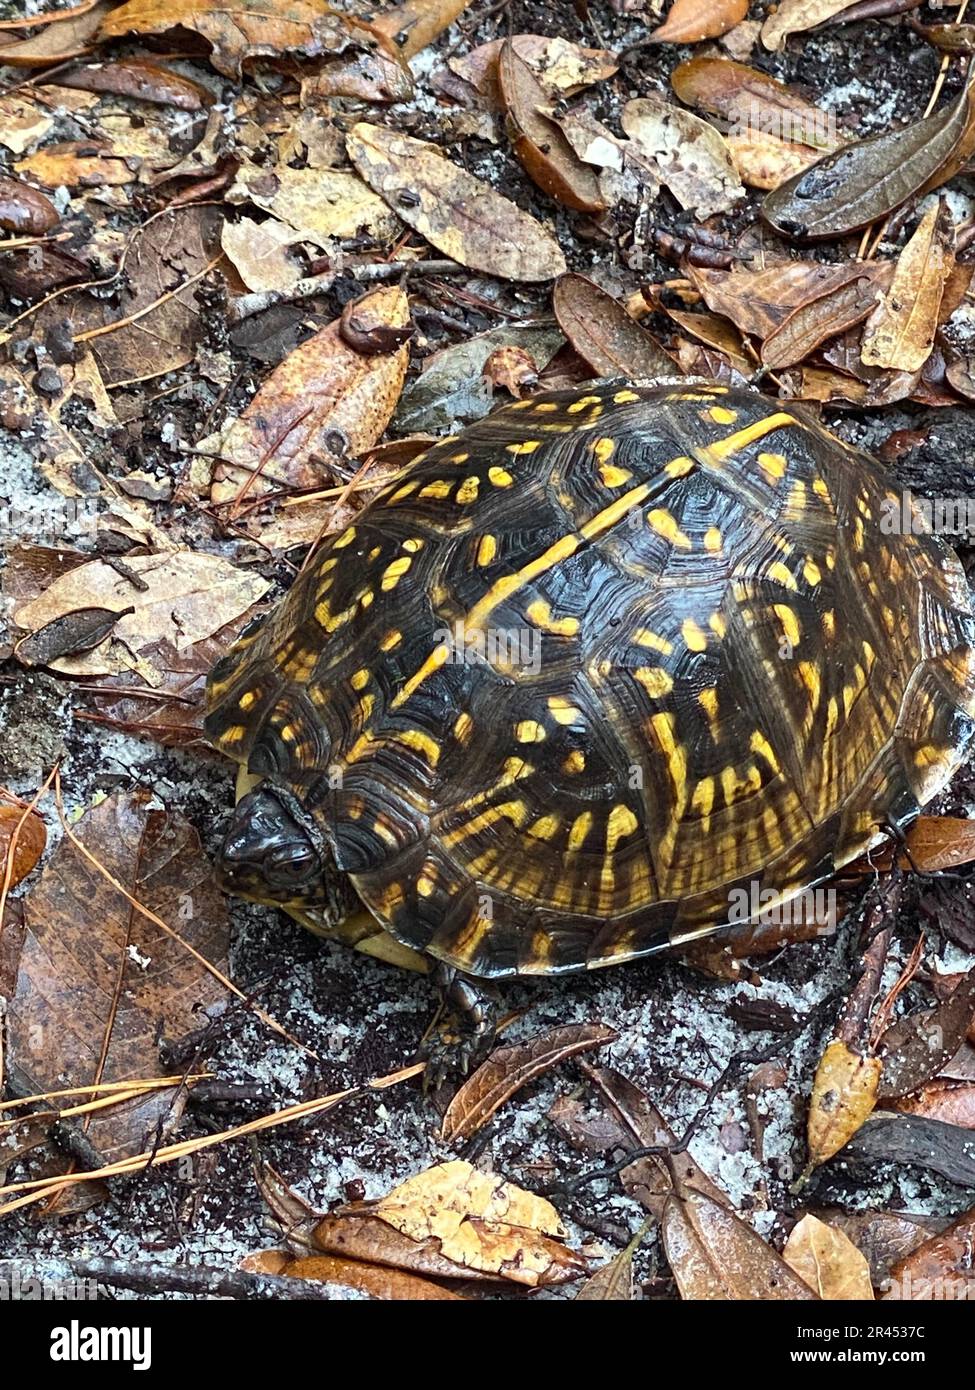 A closeup shot of an ornate box turtle, Terrapene ornata ornata. Stock Photo